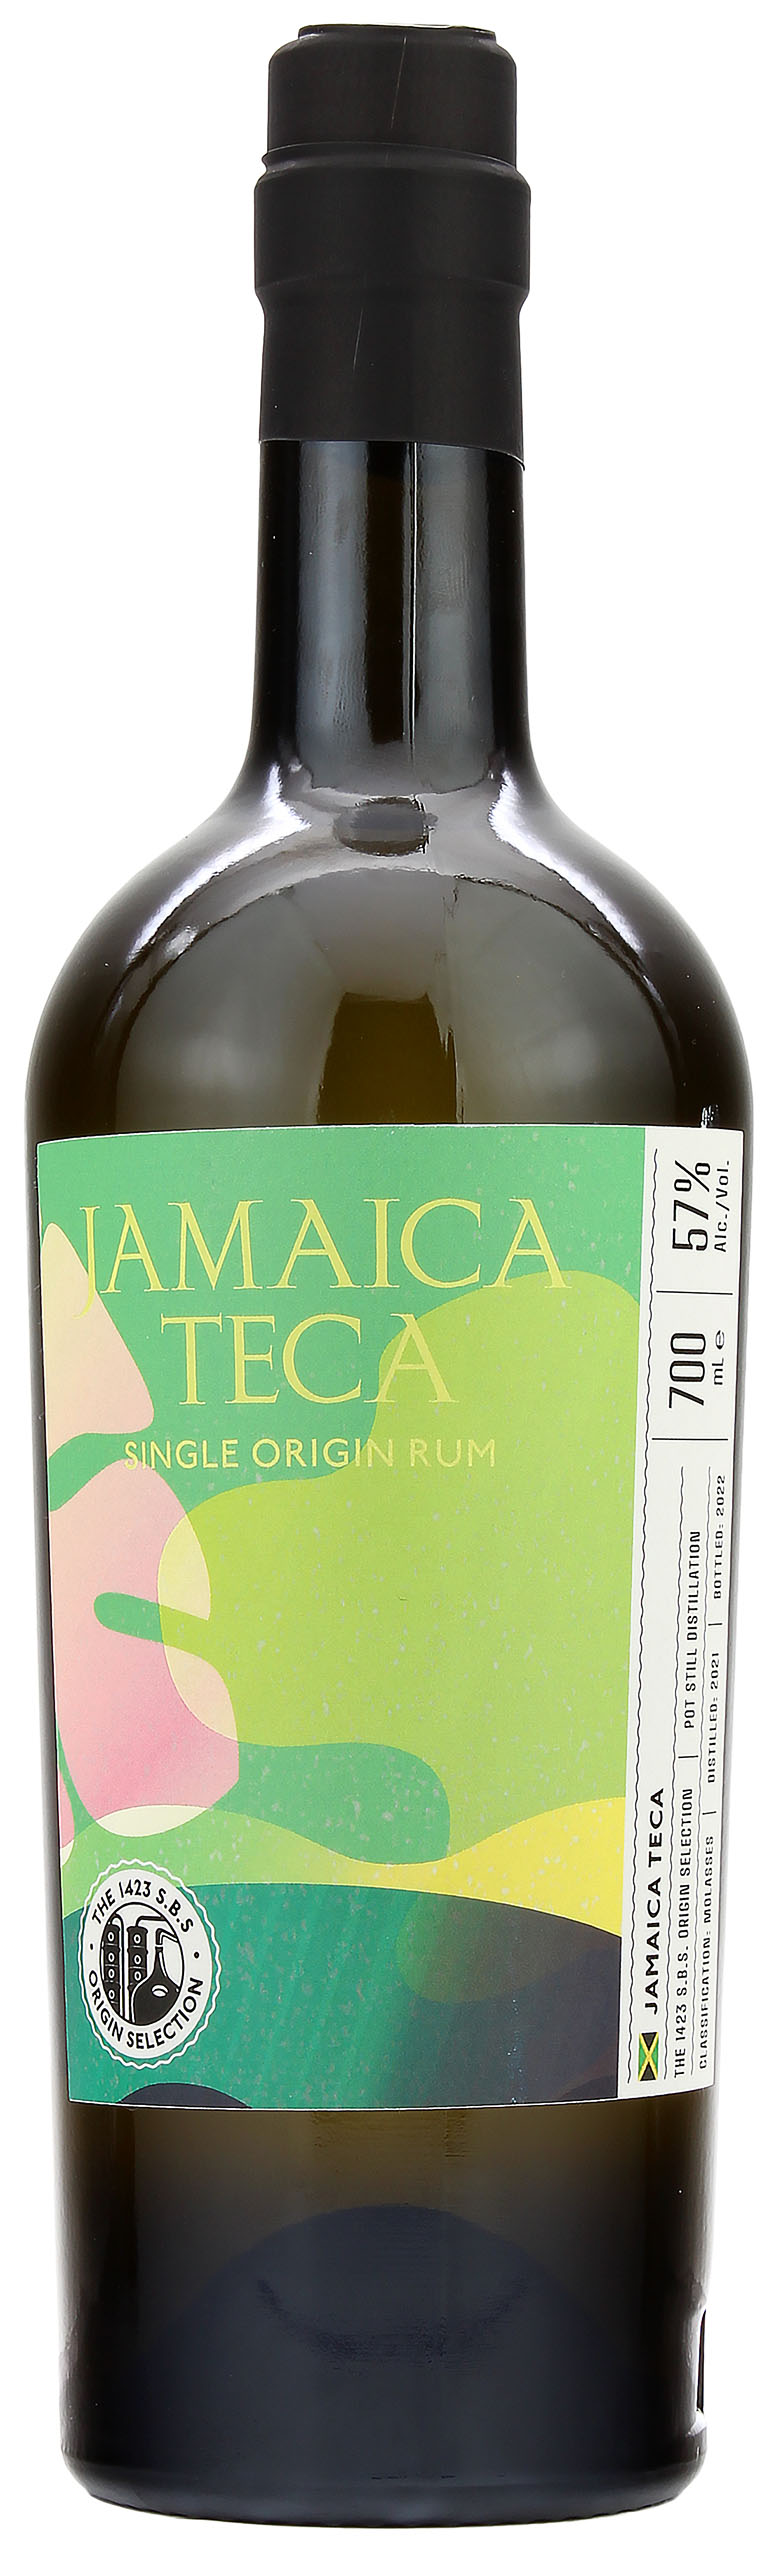 SBS Rum Origin Jamaica TECA 57.0% 0,7l